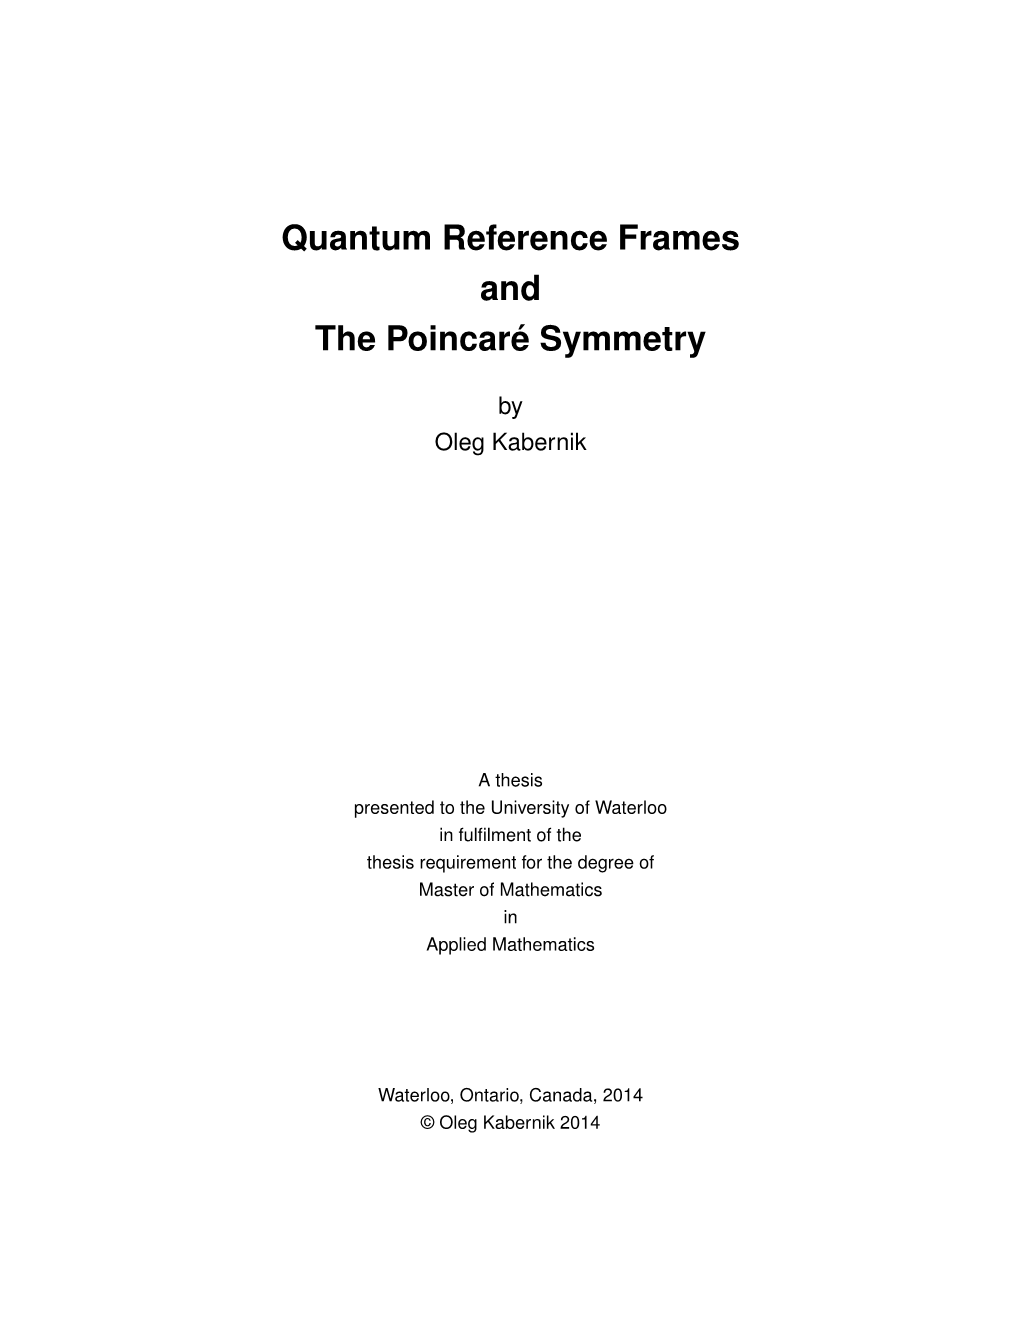 Quantum Reference Frames and the Poincaré Symmetry